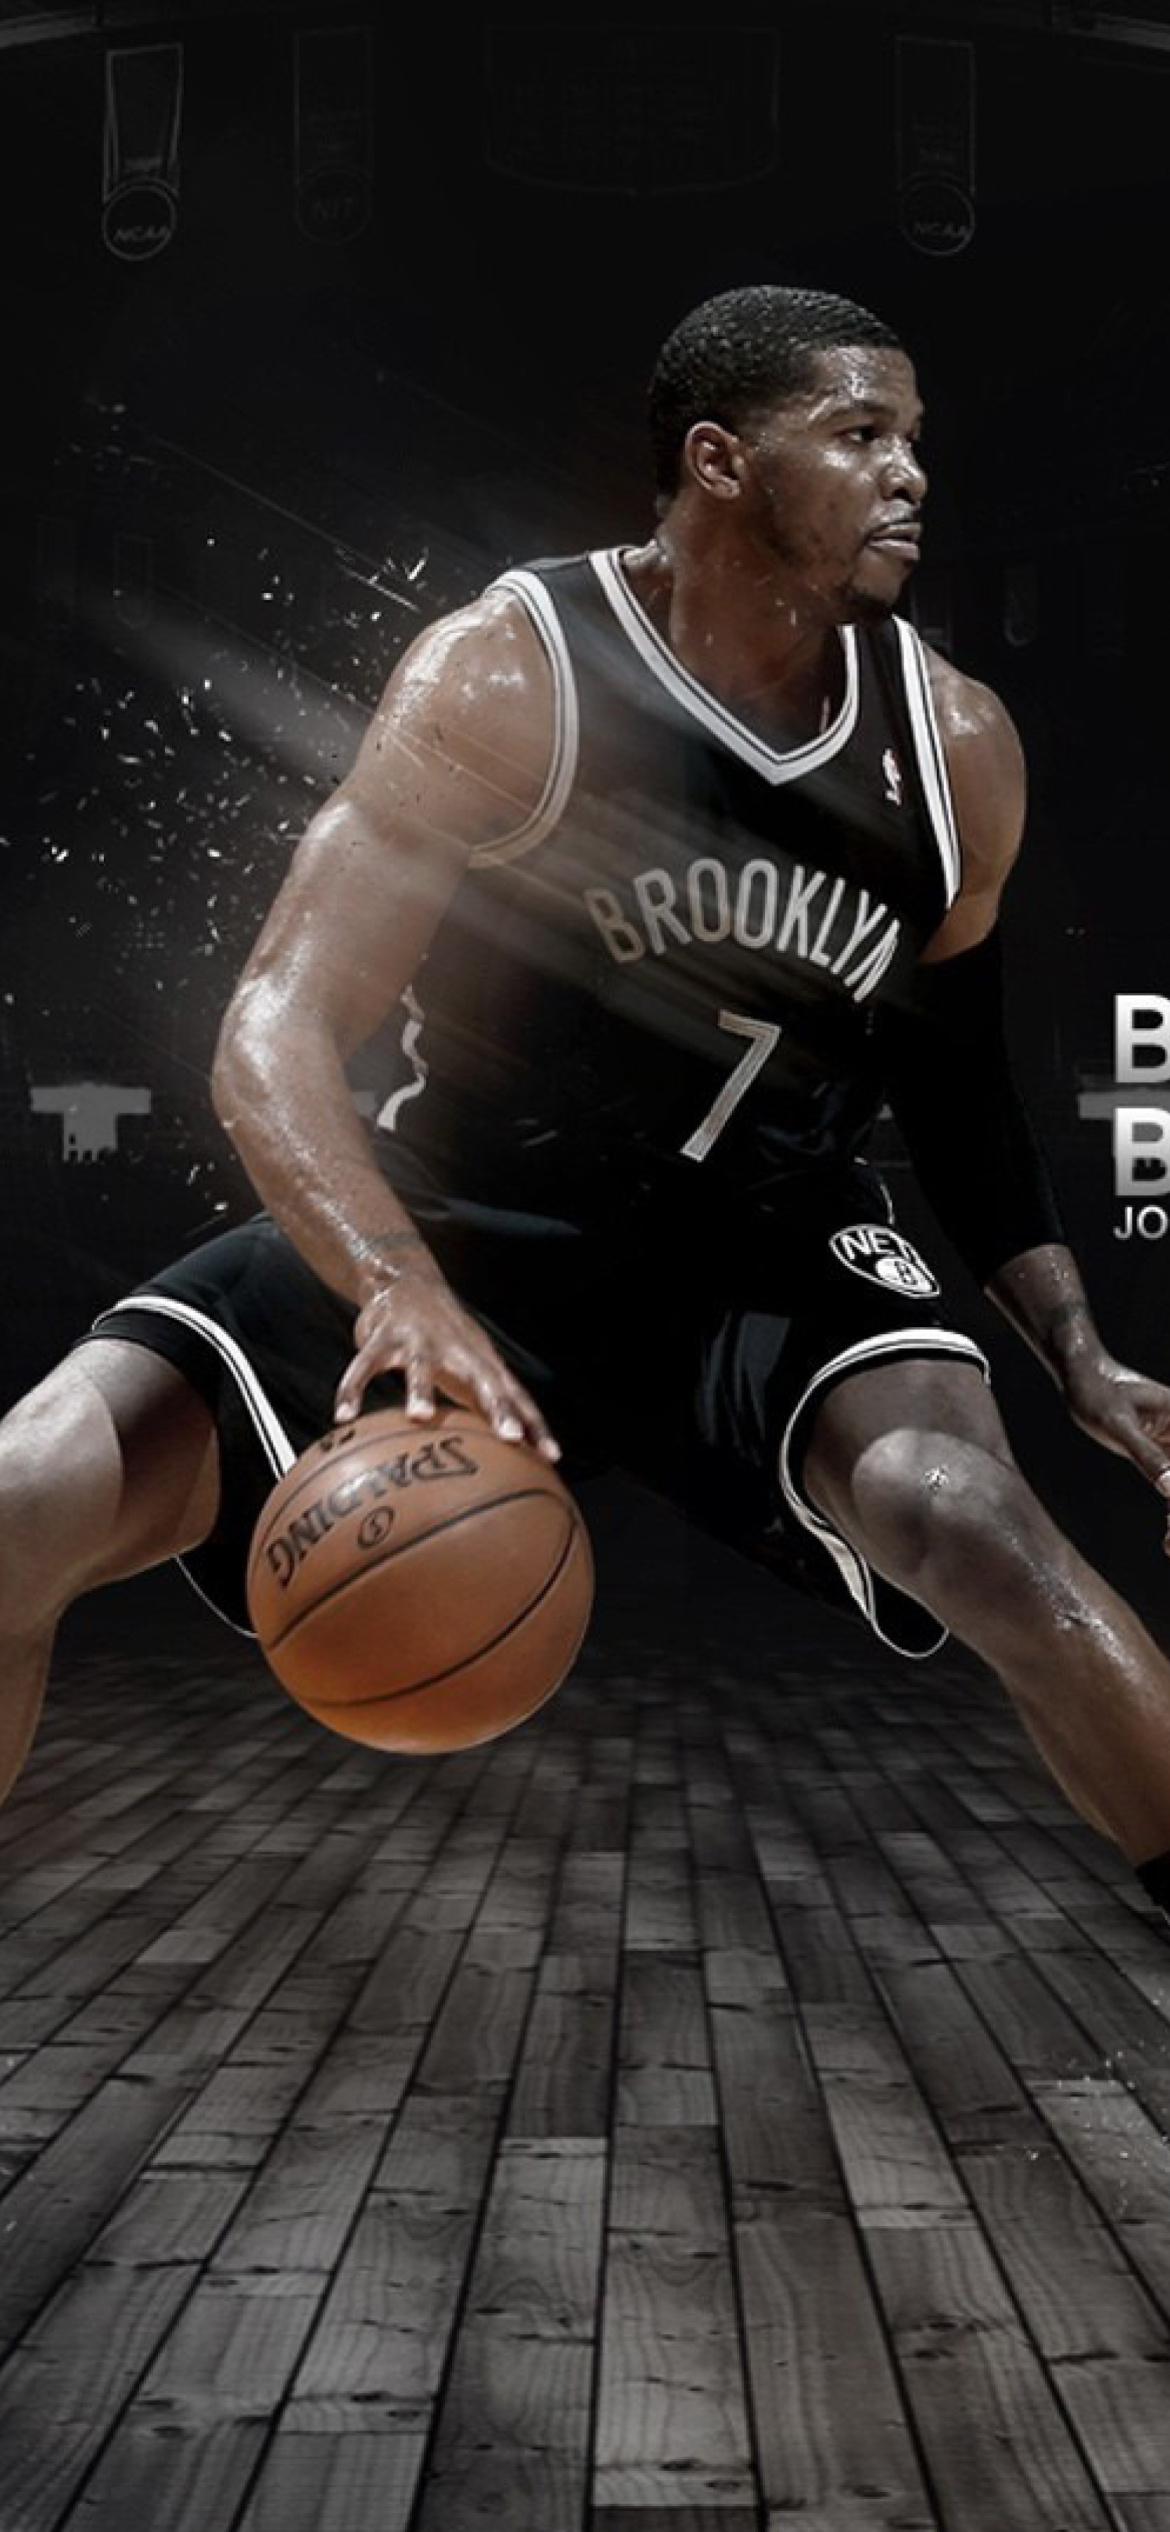 Joe Johnson from Brooklyn Nets NBA Wallpaper for iPhone XR